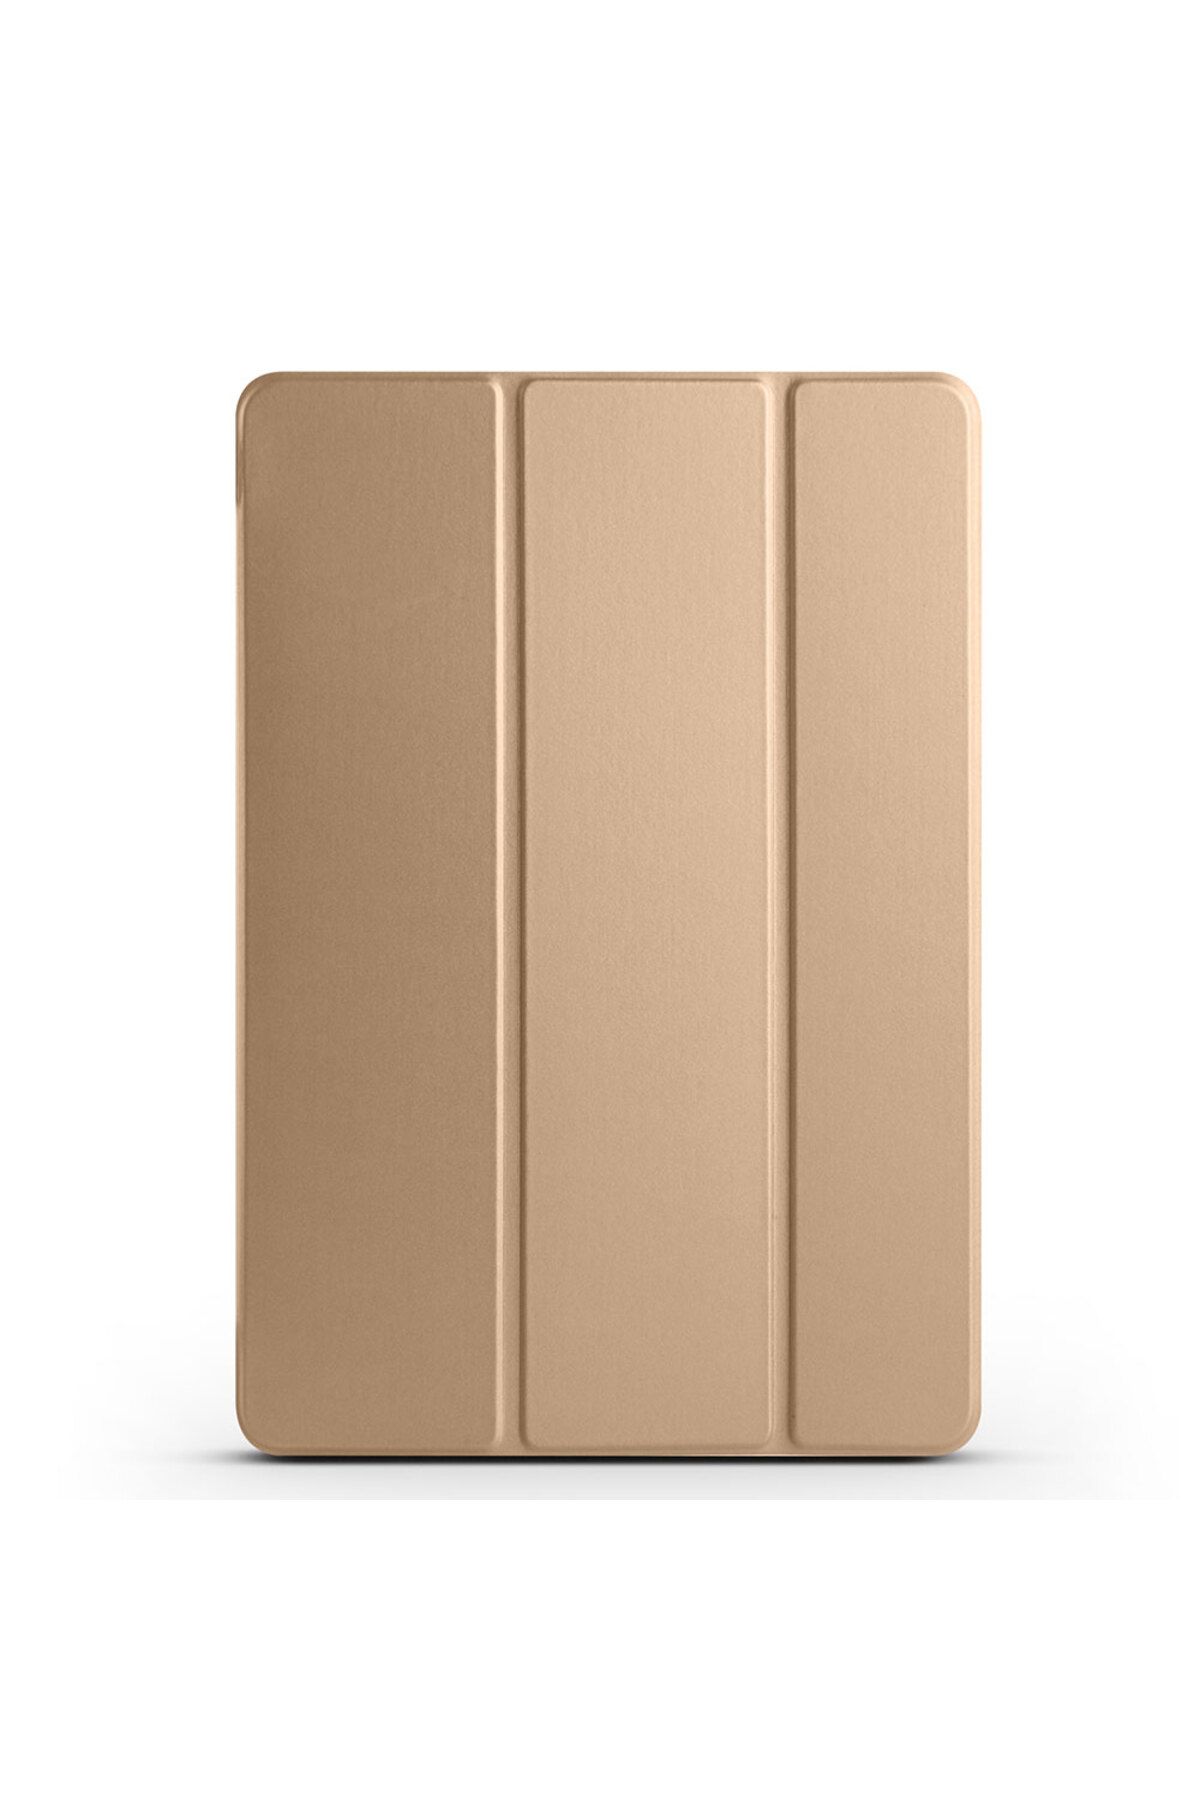 Gpack Xiaomi Pad 6 Kılıf Smart Cover Kapaklı Standlı Uyku Modlu sm1 Gold